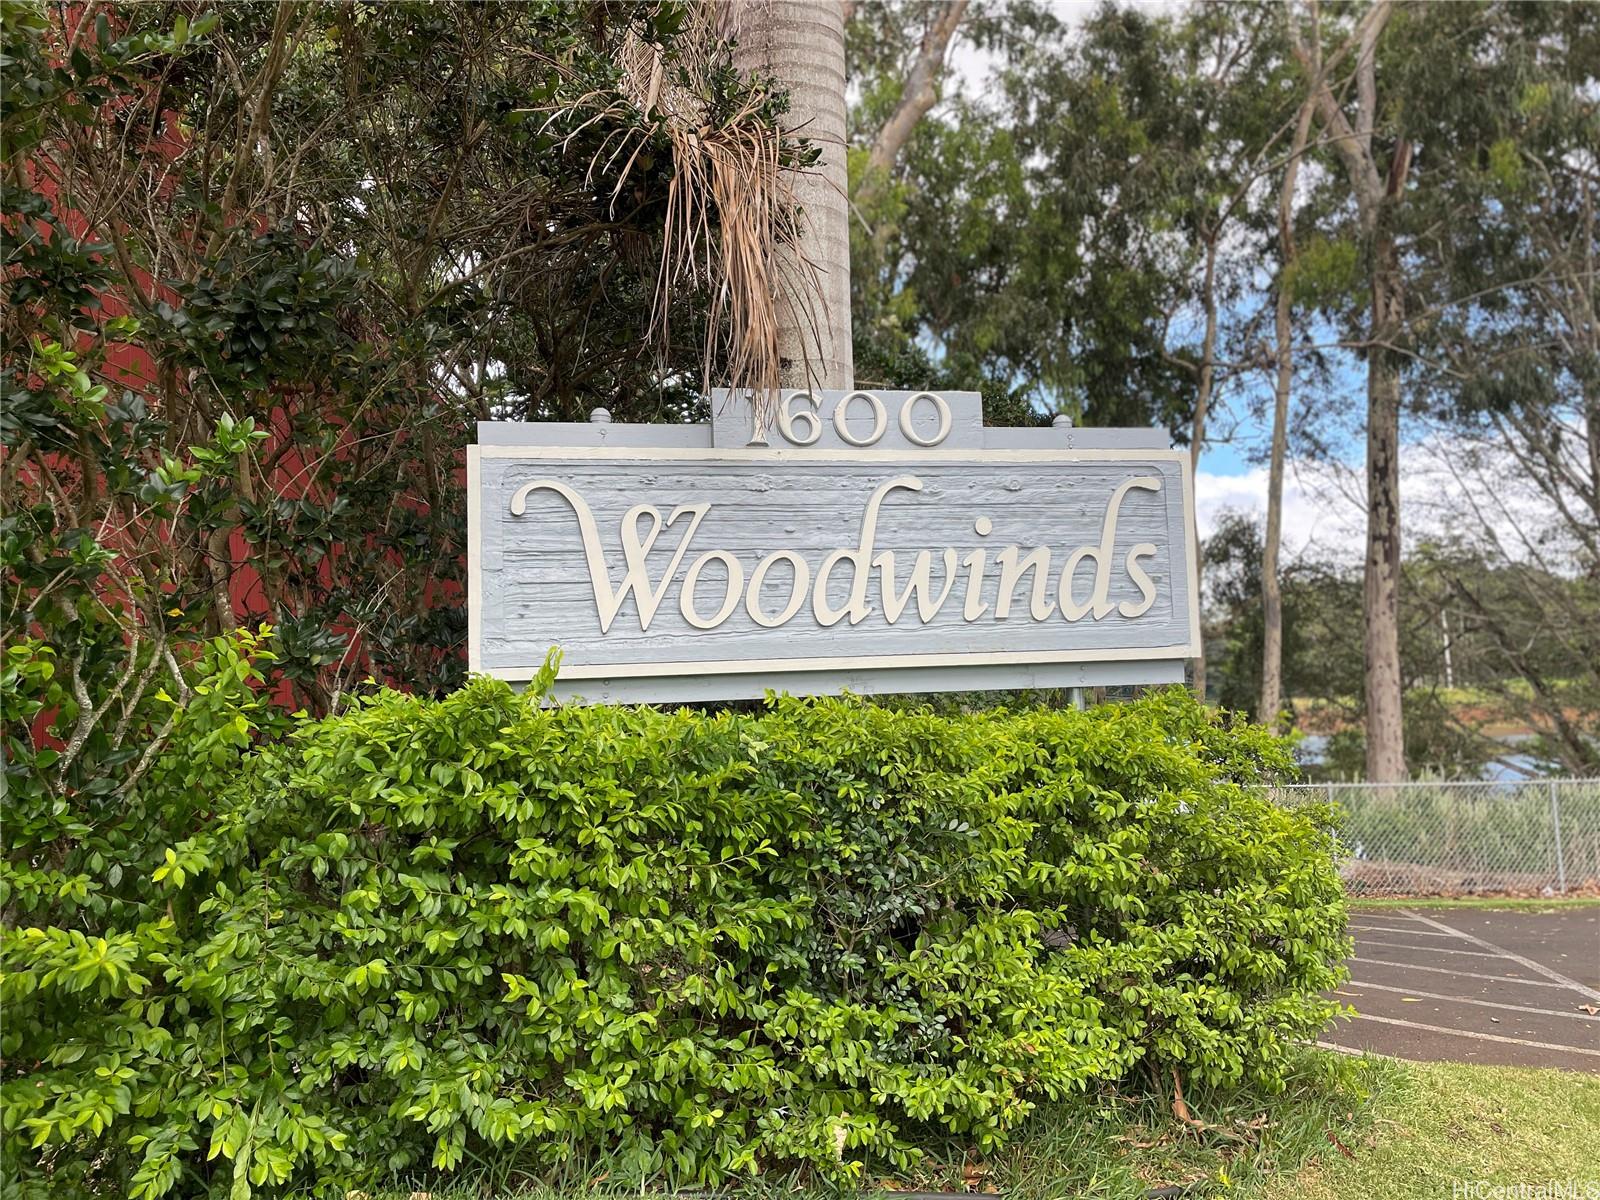 Woodwinds 1600 Wilikina Drive  Unit C611